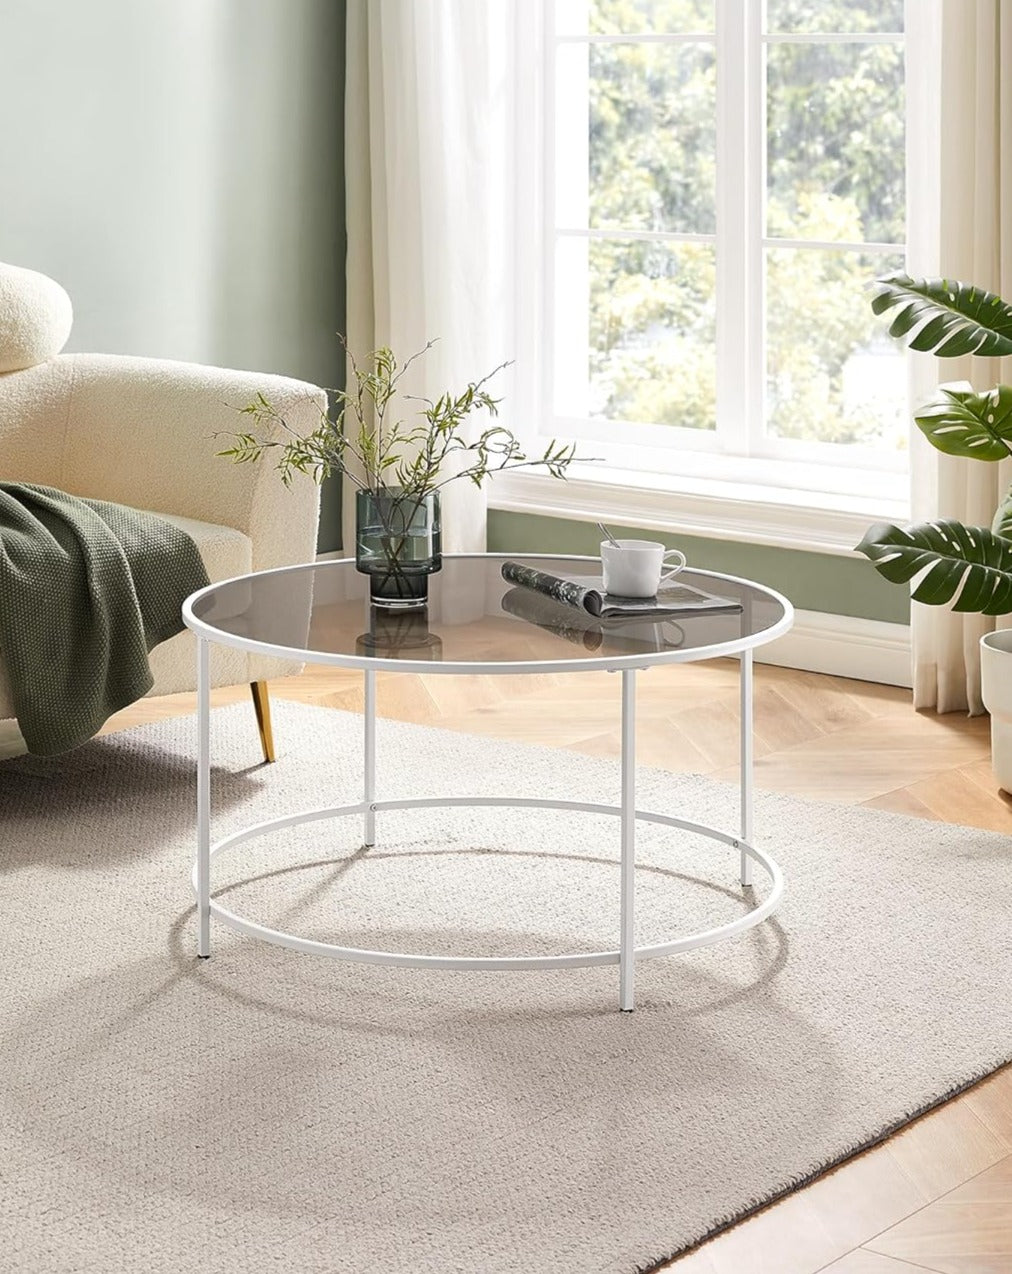 #3 - Rundt glasbord til stue, metalramme, moderne, perlehvid og skifergrå